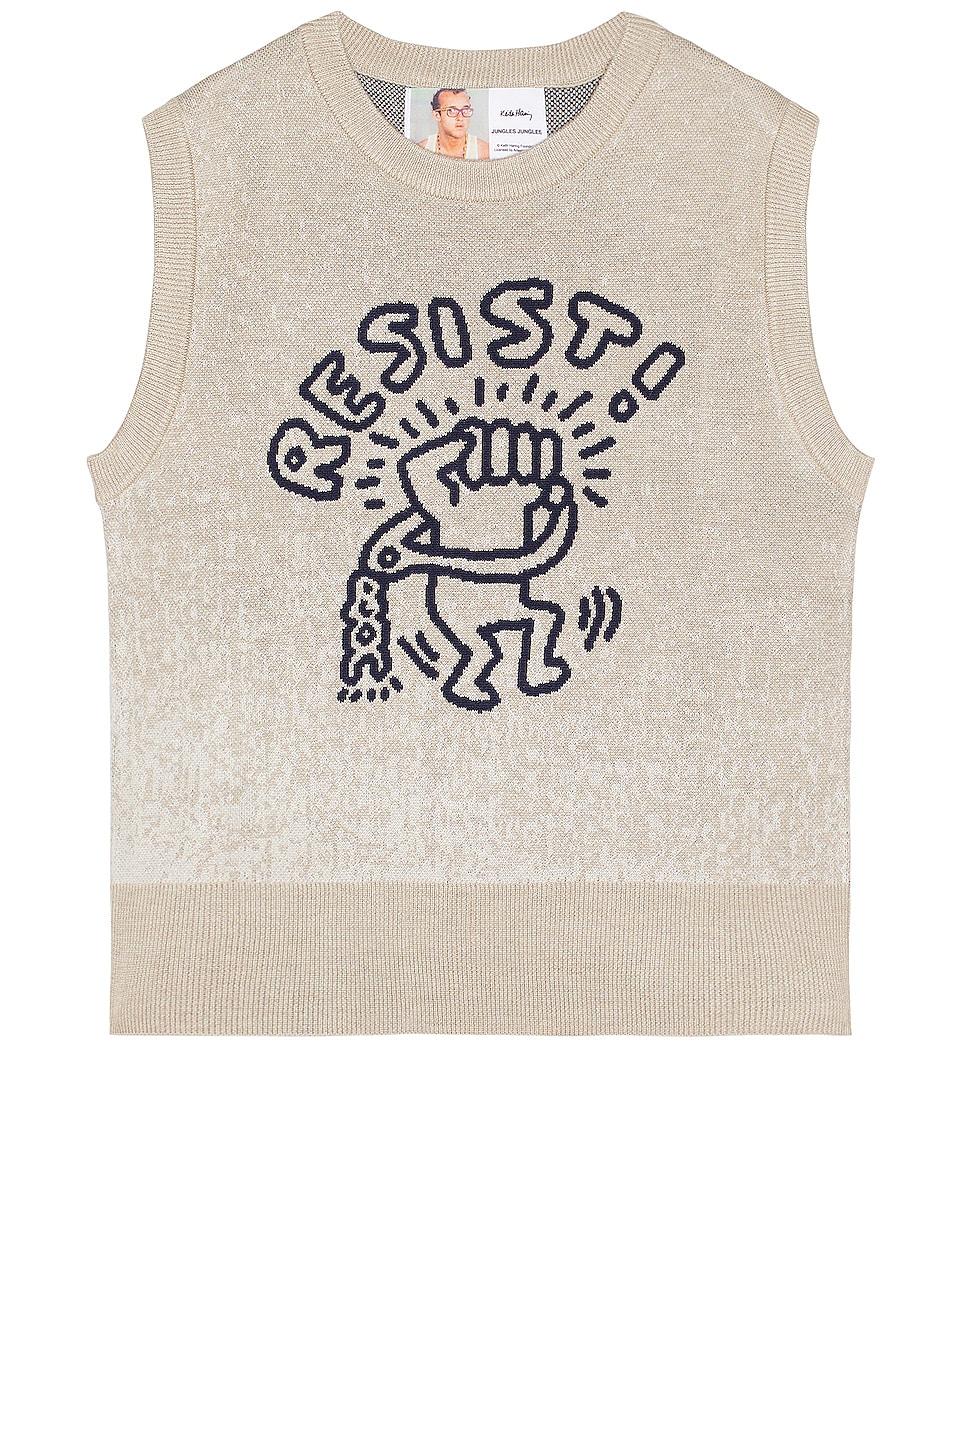 JUNGLES JUNGLES X Keith Haring Resist Vest in Natural for Men | Lyst